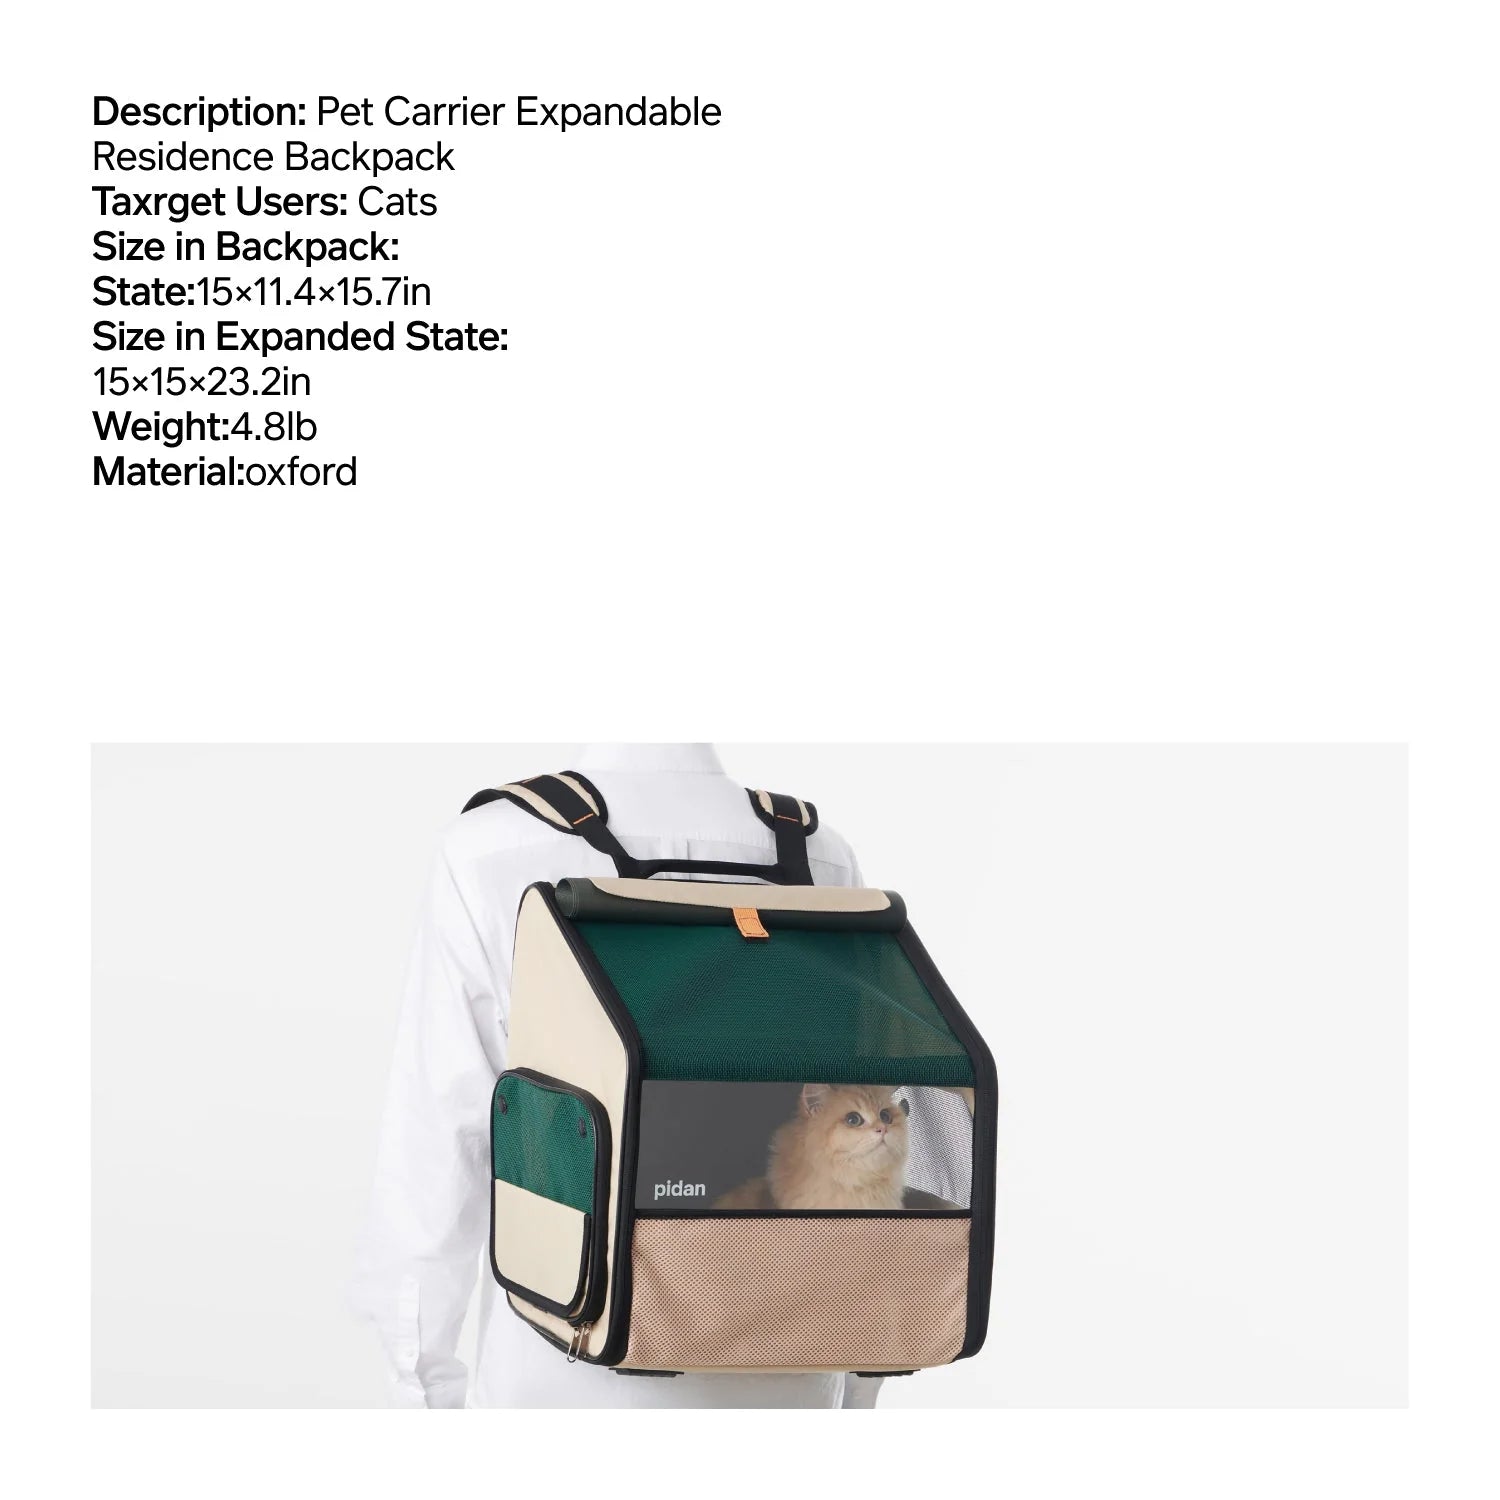 pidan - Expandable Backpack